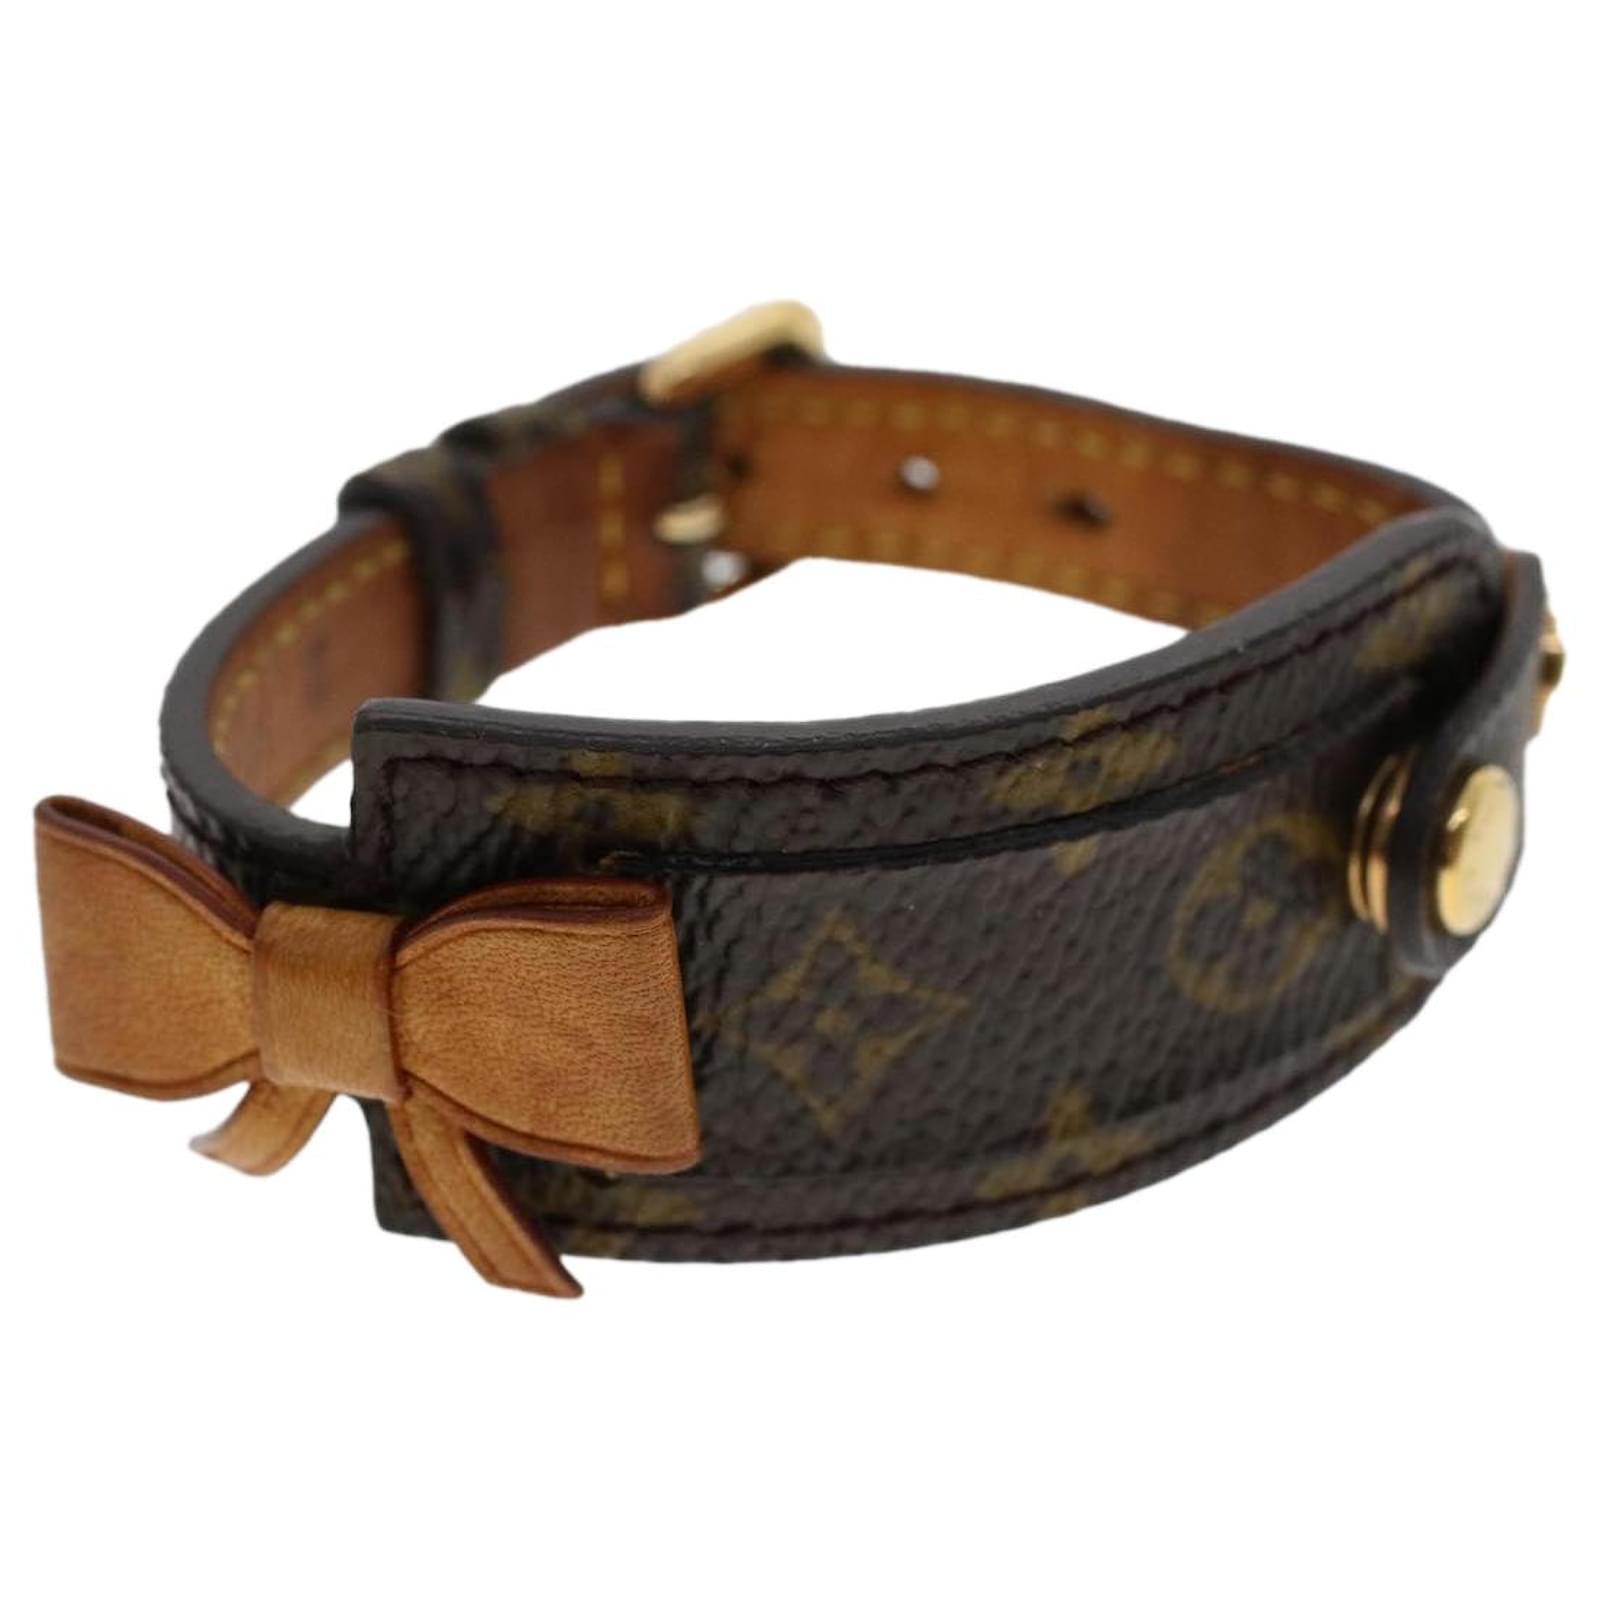 Louis Vuitton LV Logo Leather Bracelet